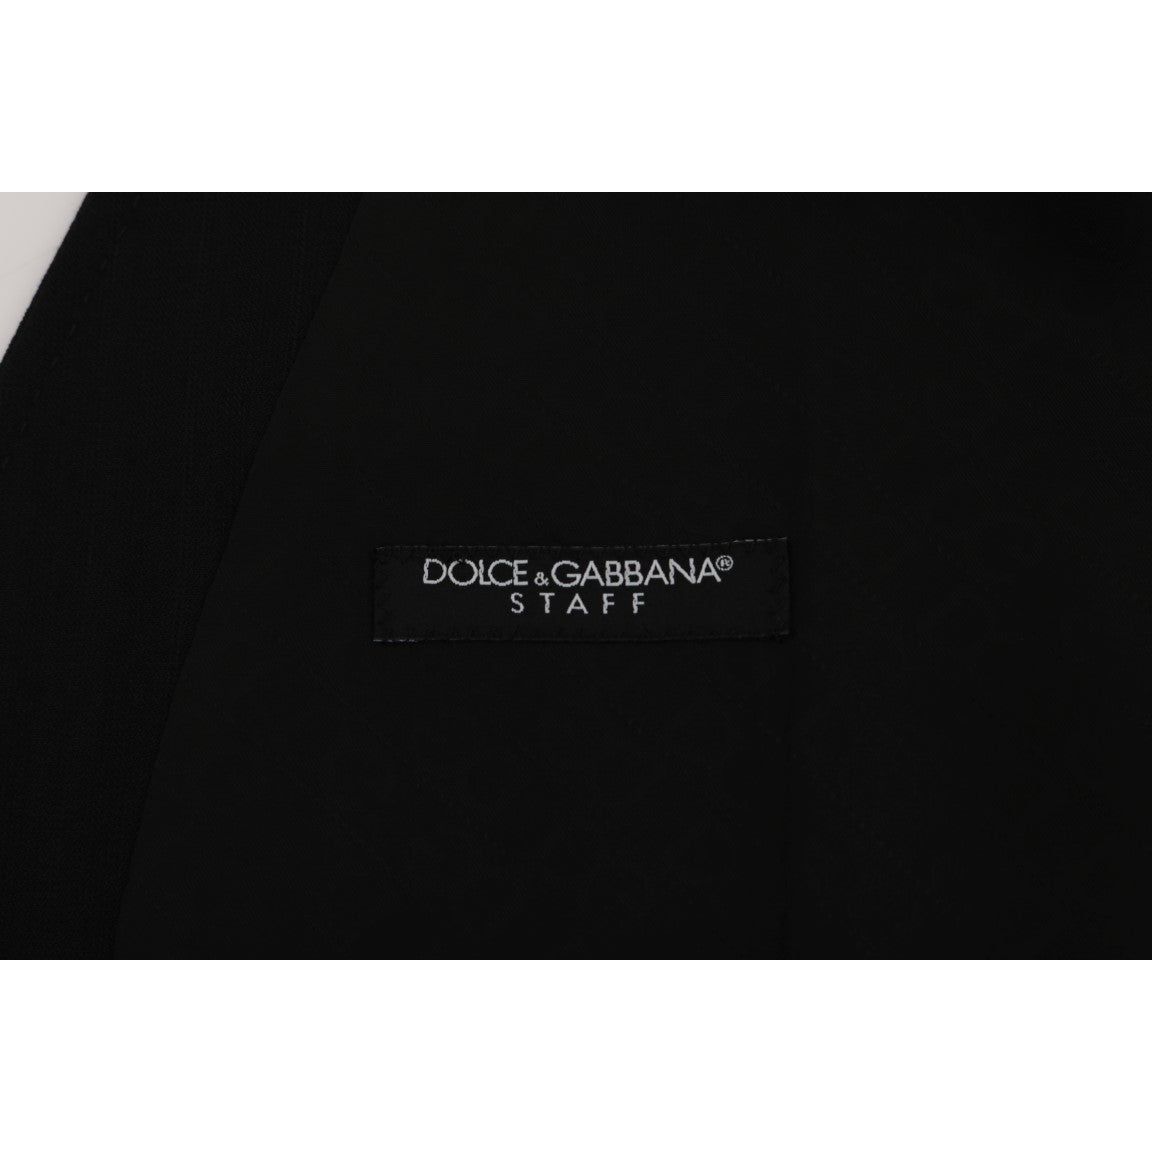 Dolce & Gabbana Elegant Striped Wool Blend Waistcoat Vest black-staff-wool-stretch-vest-3 499326-black-staff-wool-stretch-vest-5-5.jpg